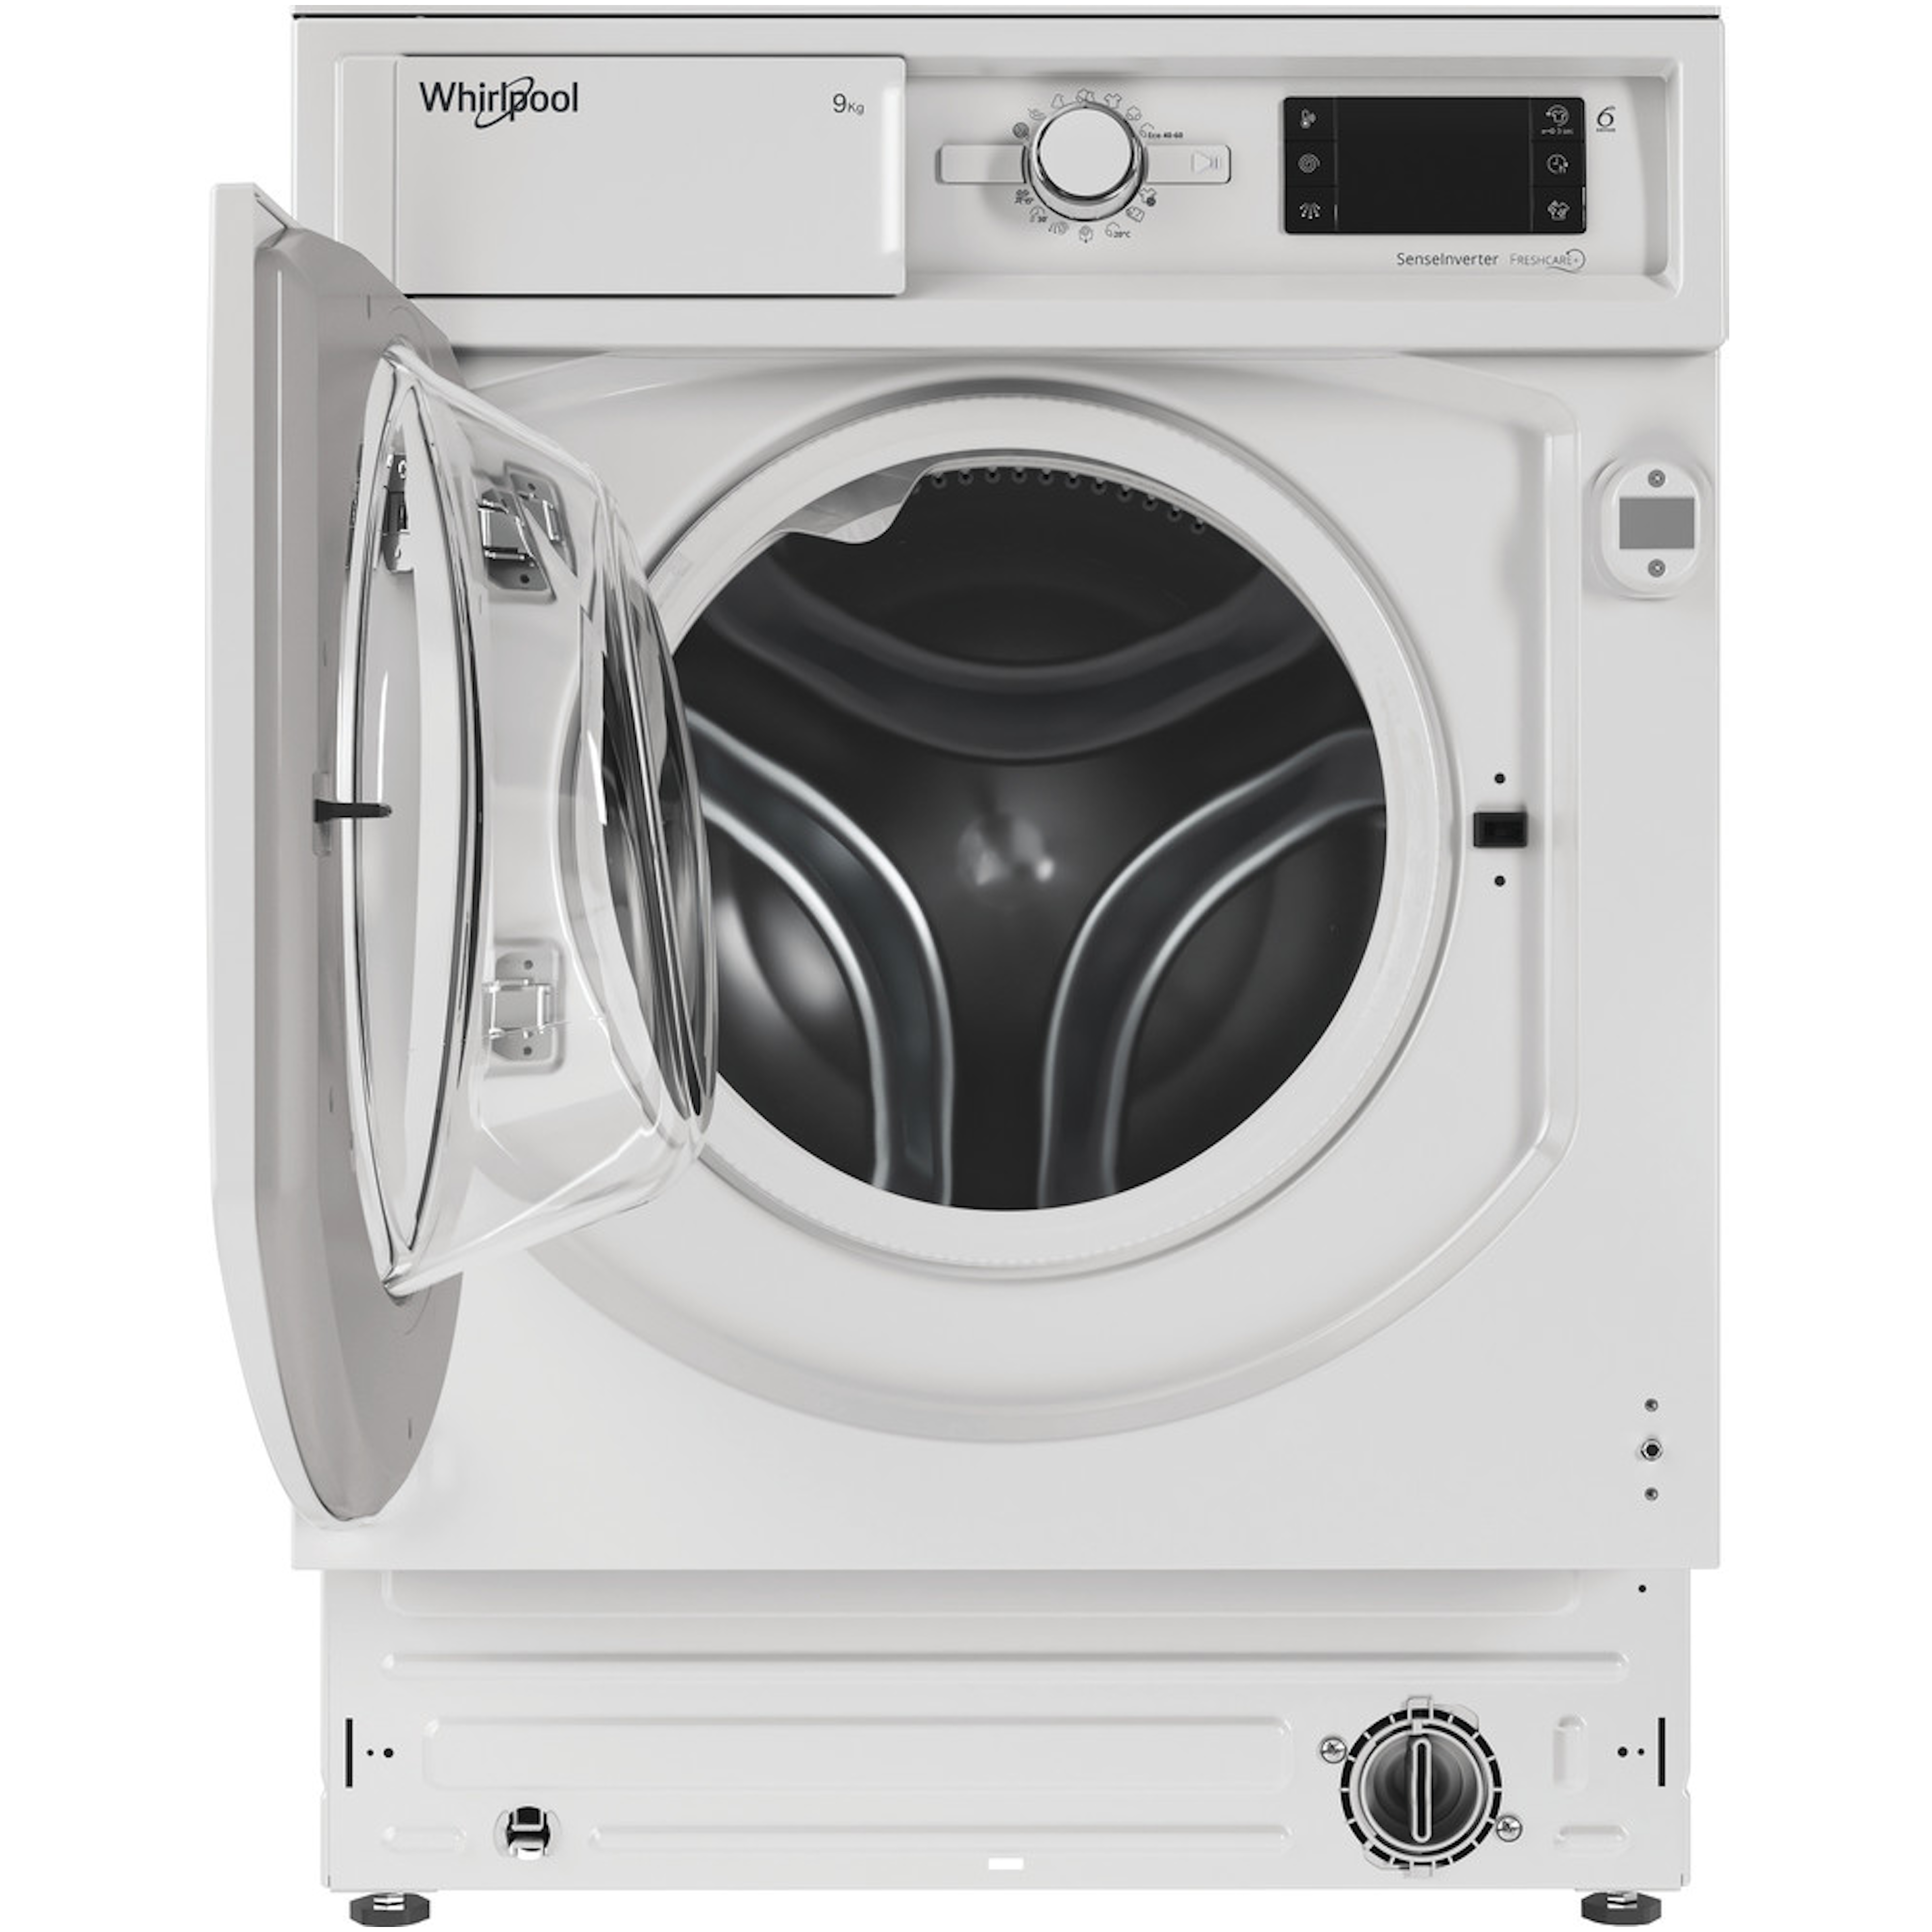 Whirlpool wasmachine BIWMWG91485EU afbeelding 3